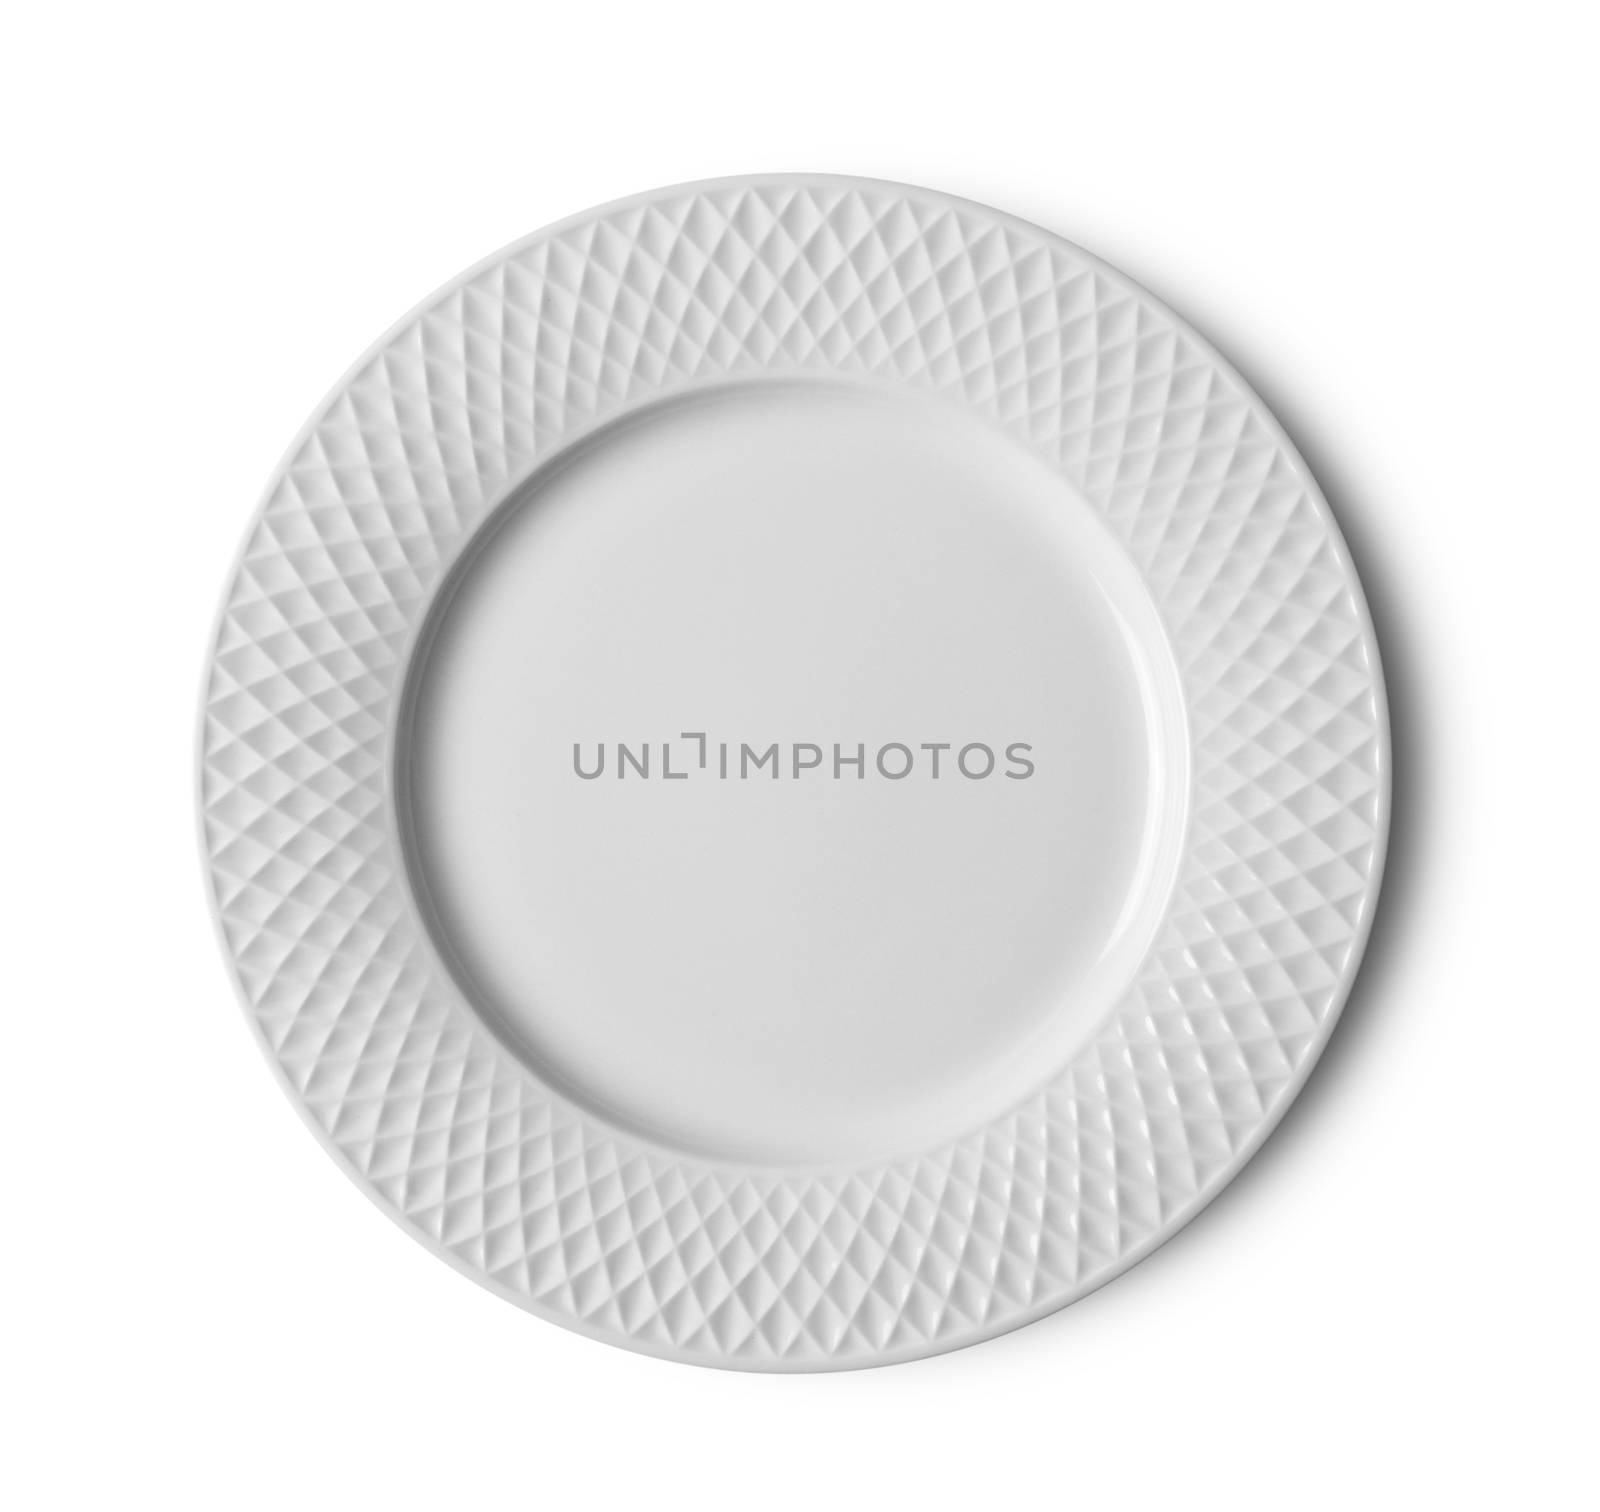 white ceramic plate on white background